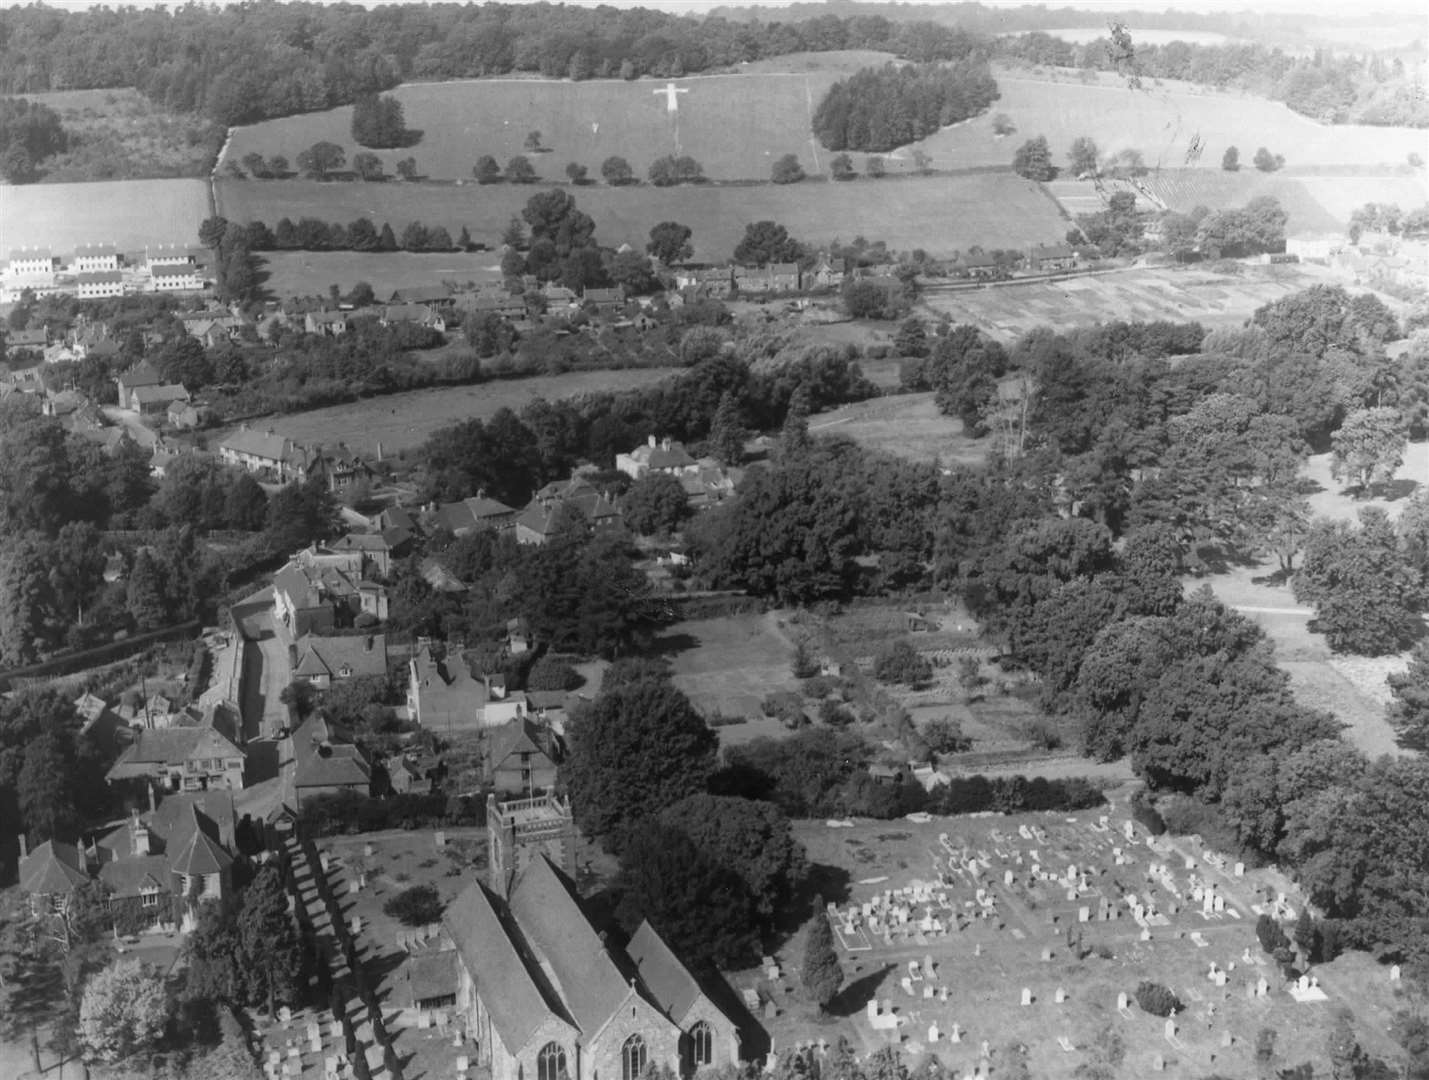 An aerial photo of Shoreham near Sevenoaks from September 1947, showing the cross on the Downs